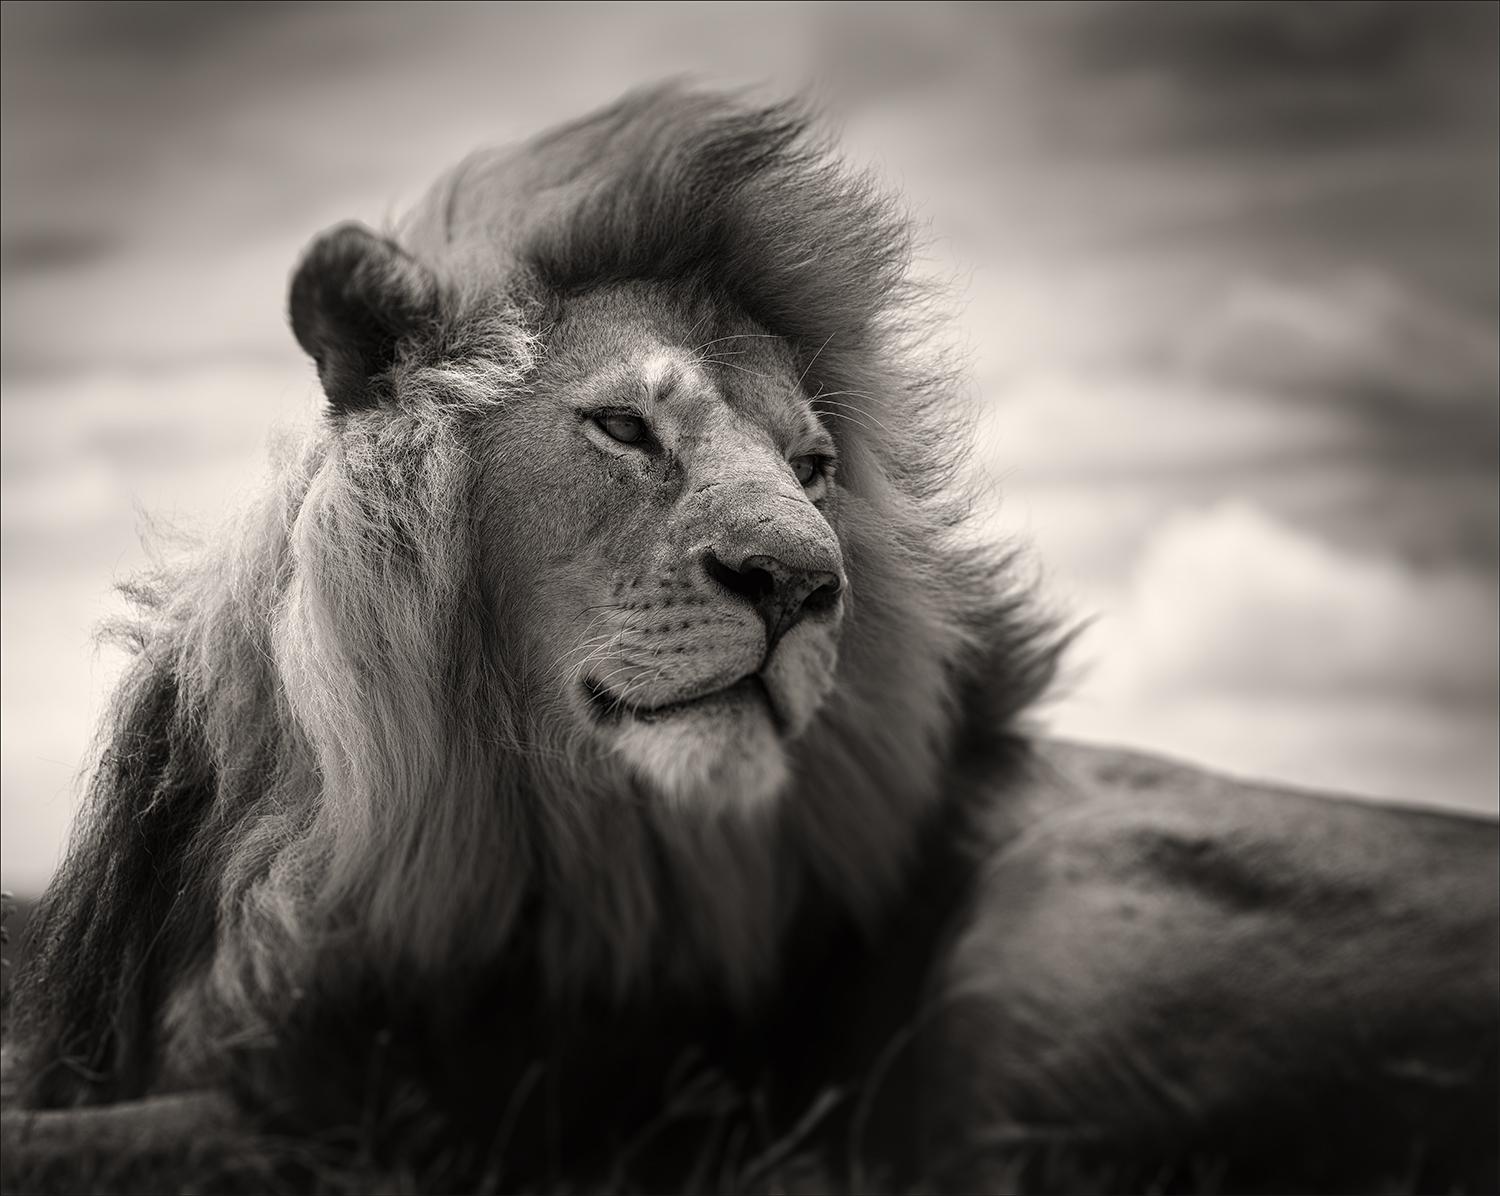 Joachim Schmeisser Portrait Photograph - Born a Lion, animal, wildlife, black and white photography